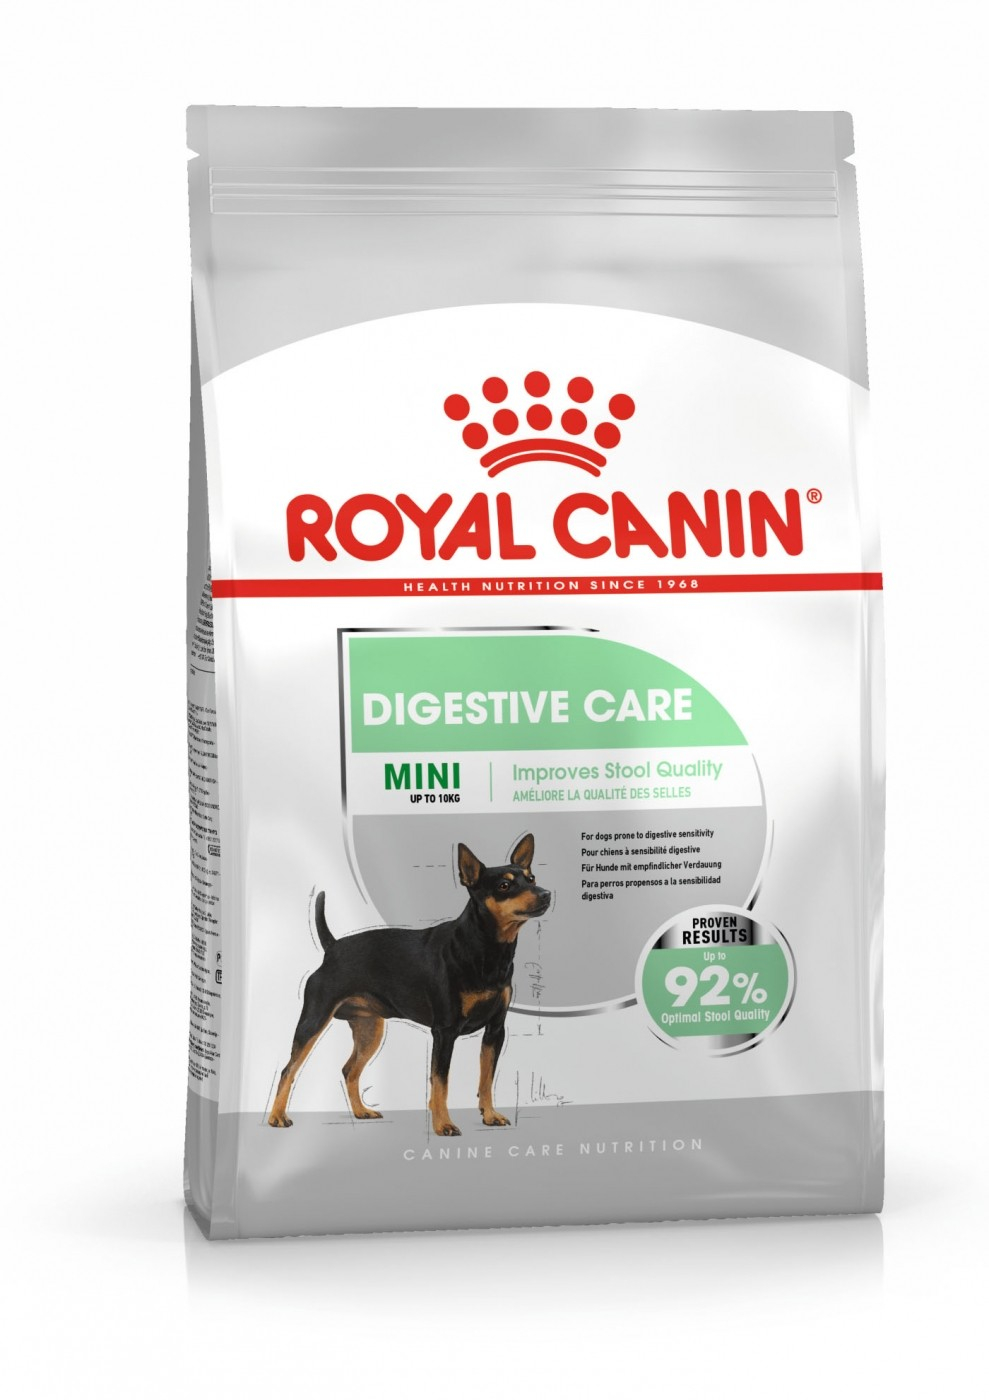 Royal Canin Mini Digestive Care perros mini sensibles